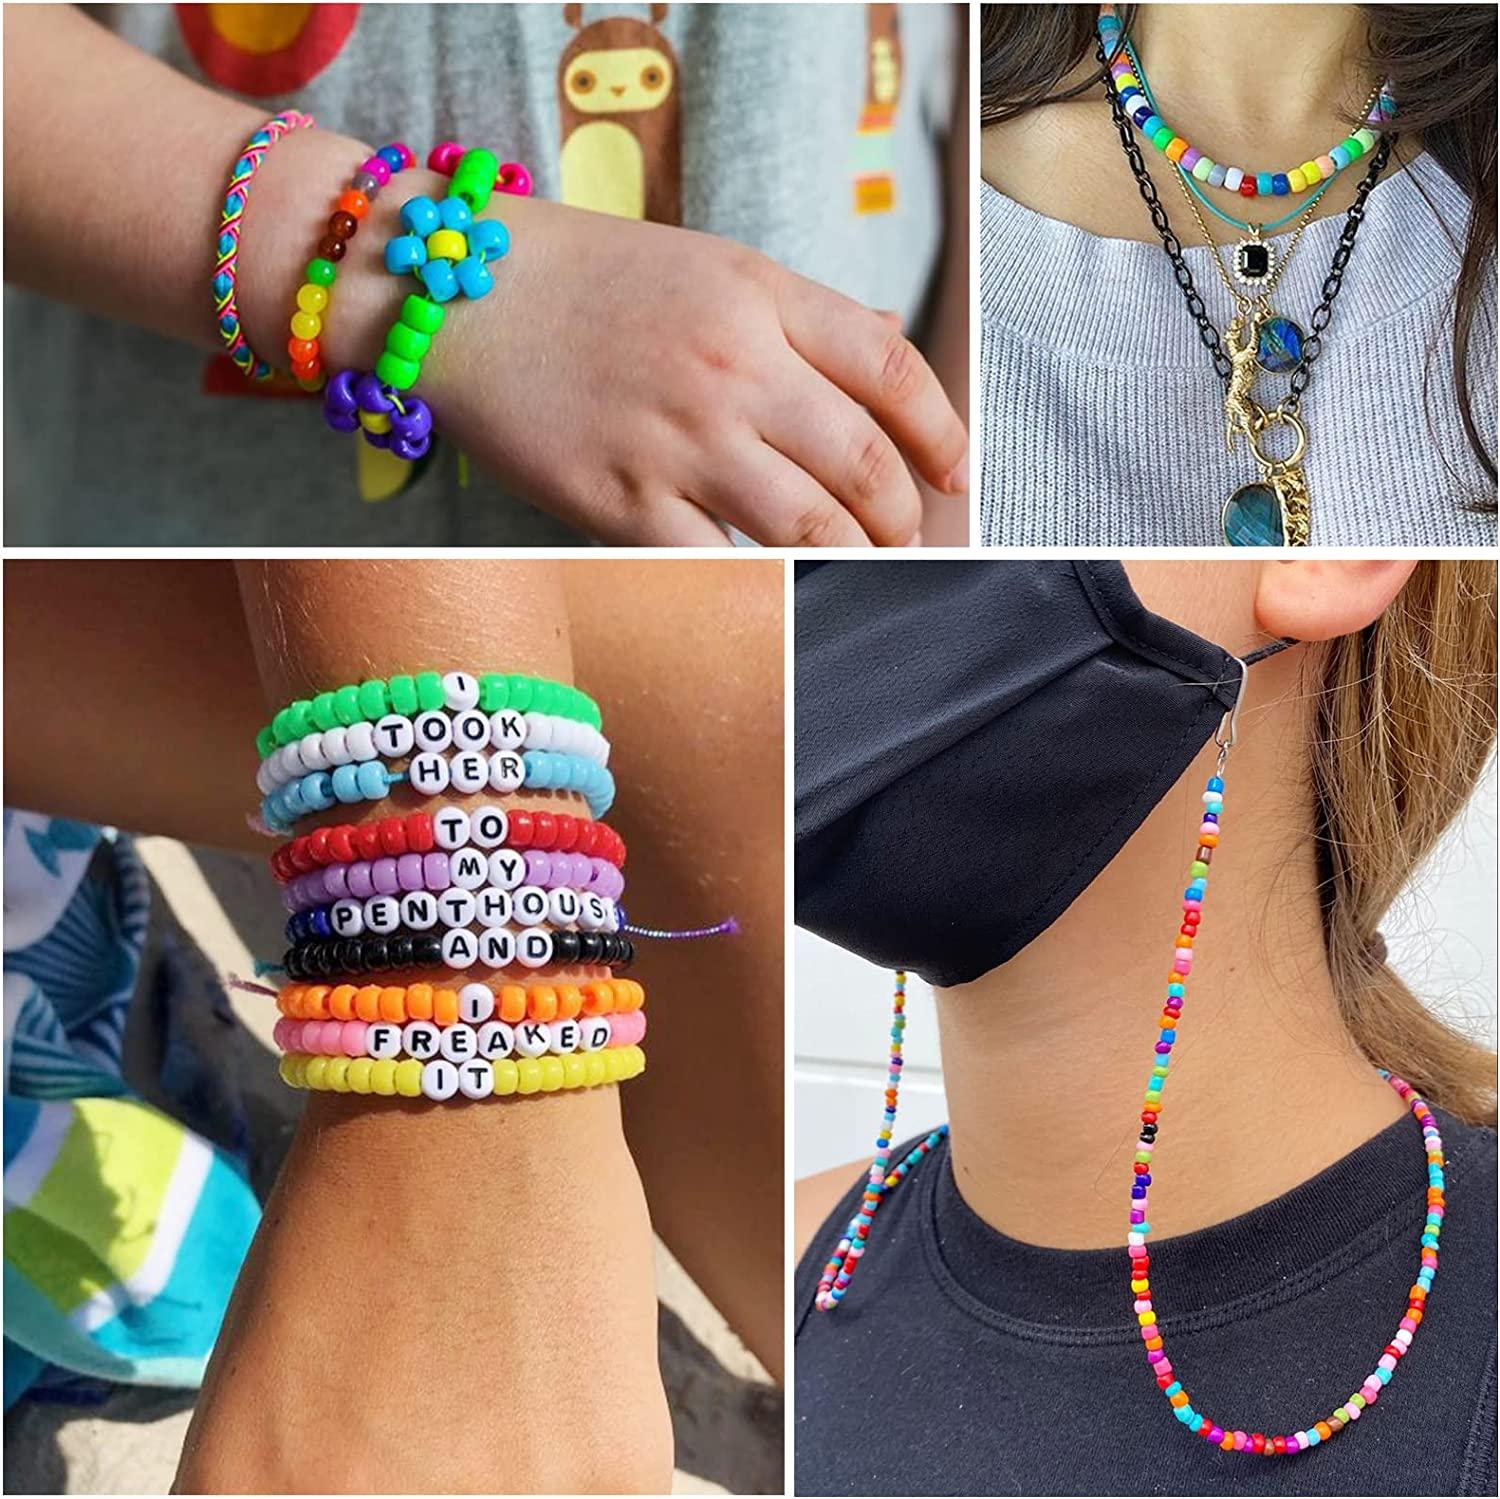 Simetufy 1200 Pcs Pony Beads Plastic Beads for Bracelet Making